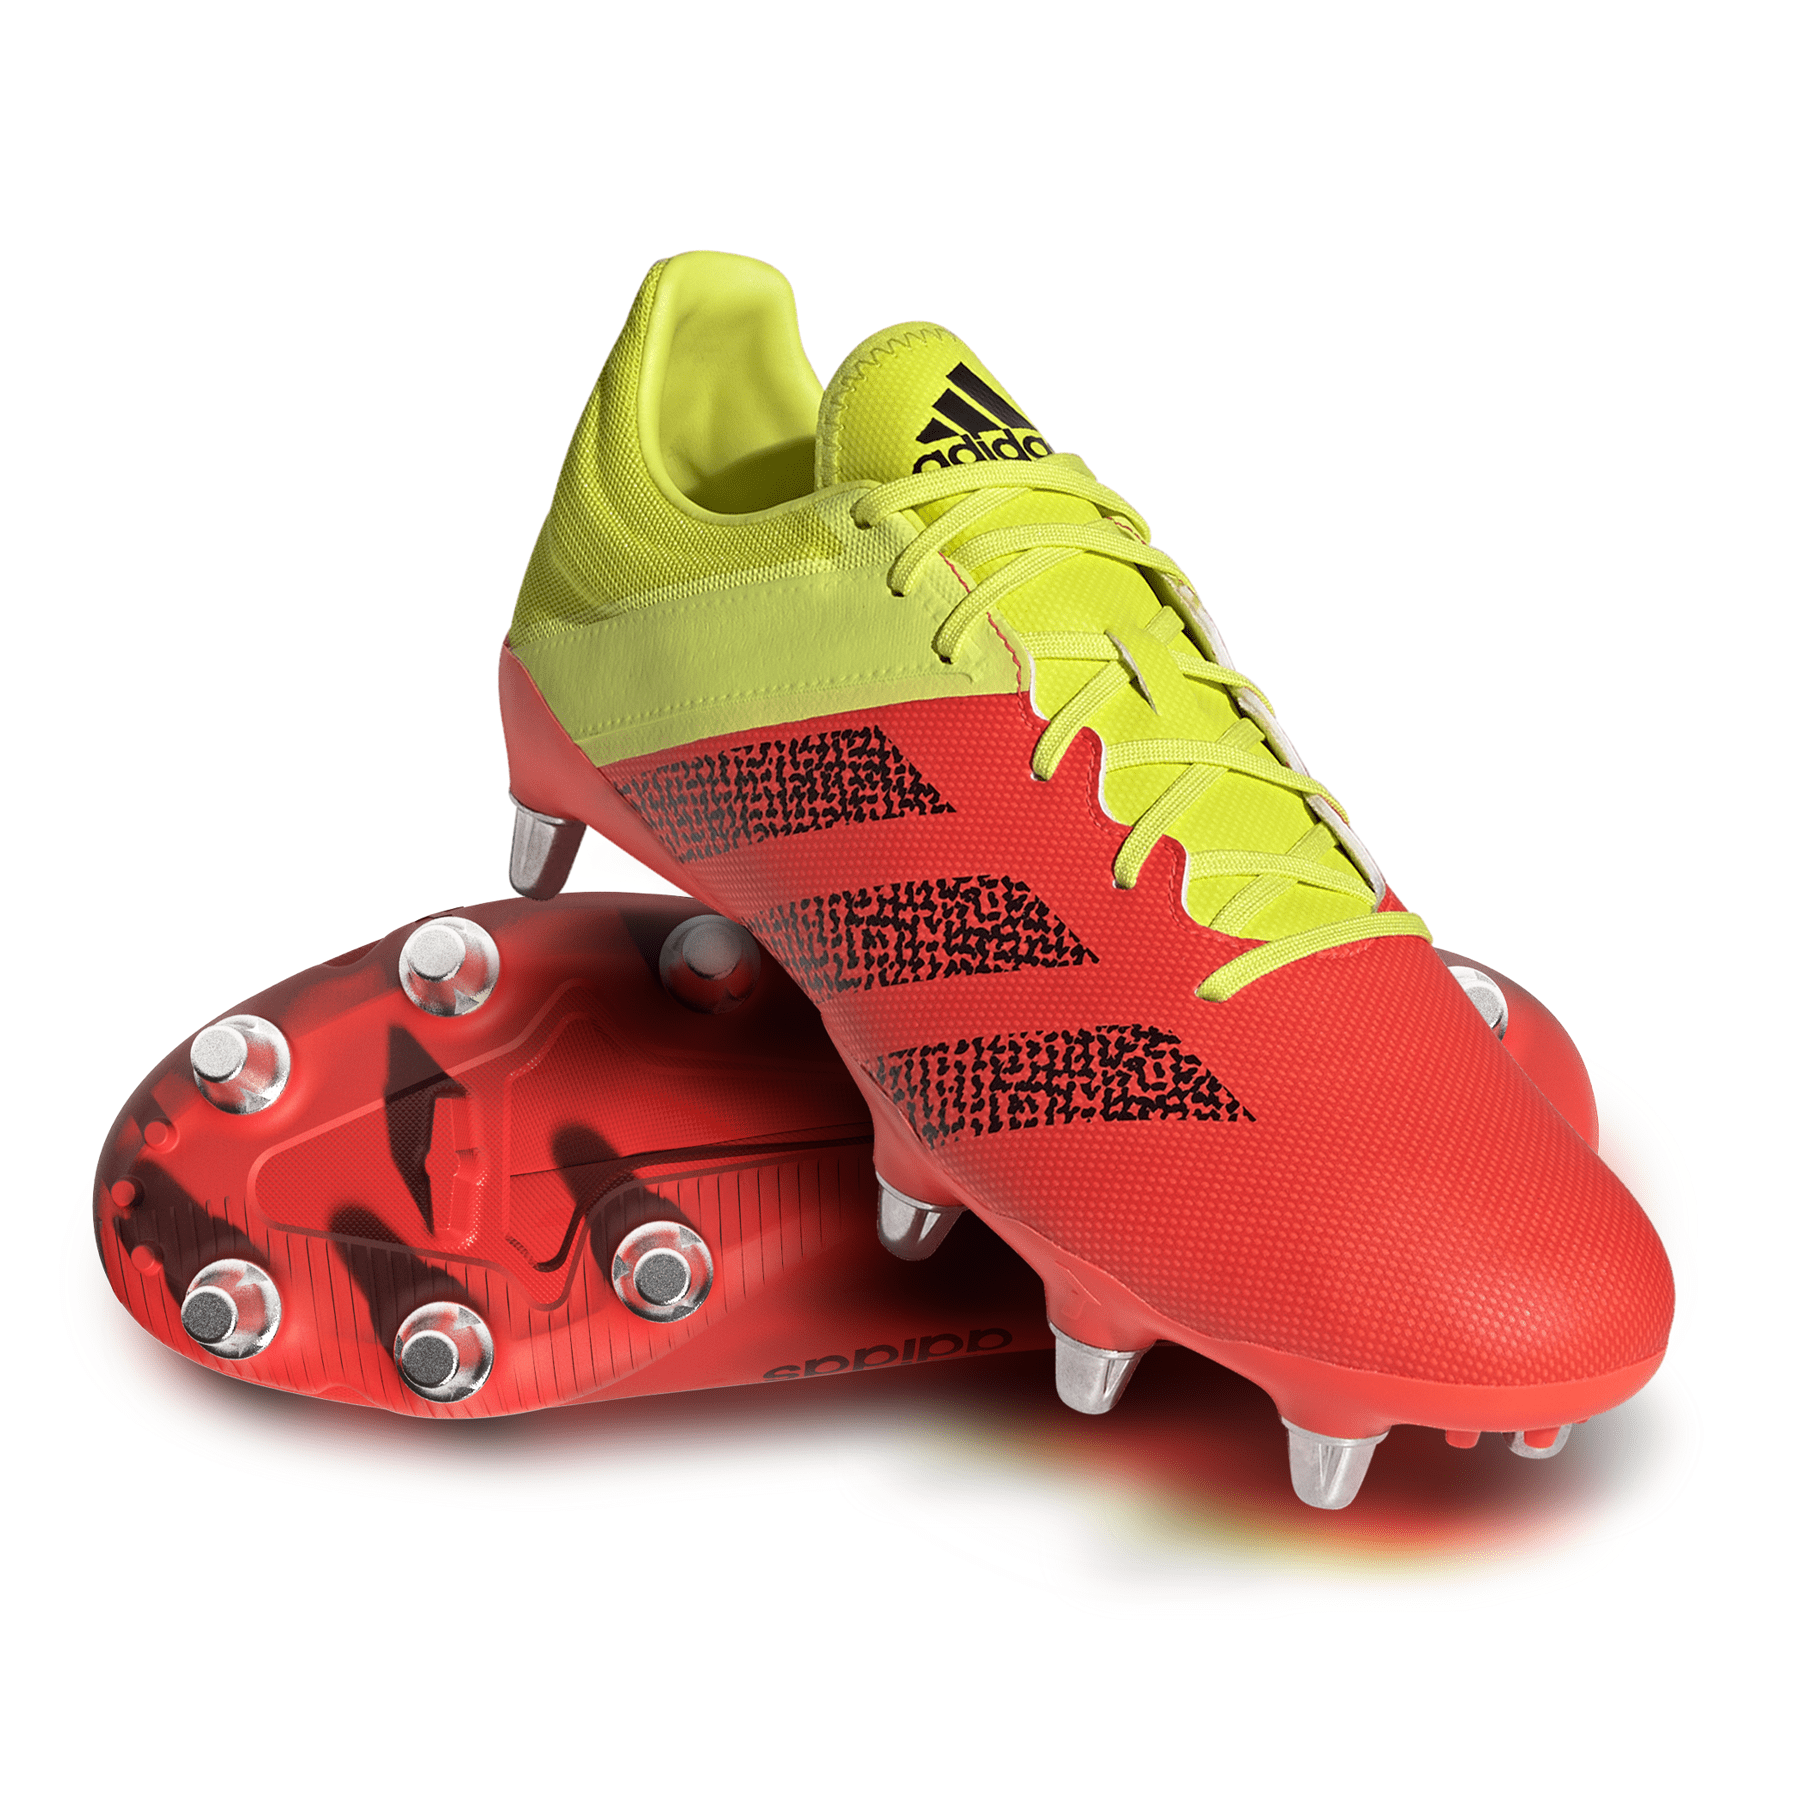 Kakari Elite Boots - Red/Yellow - BOOTS